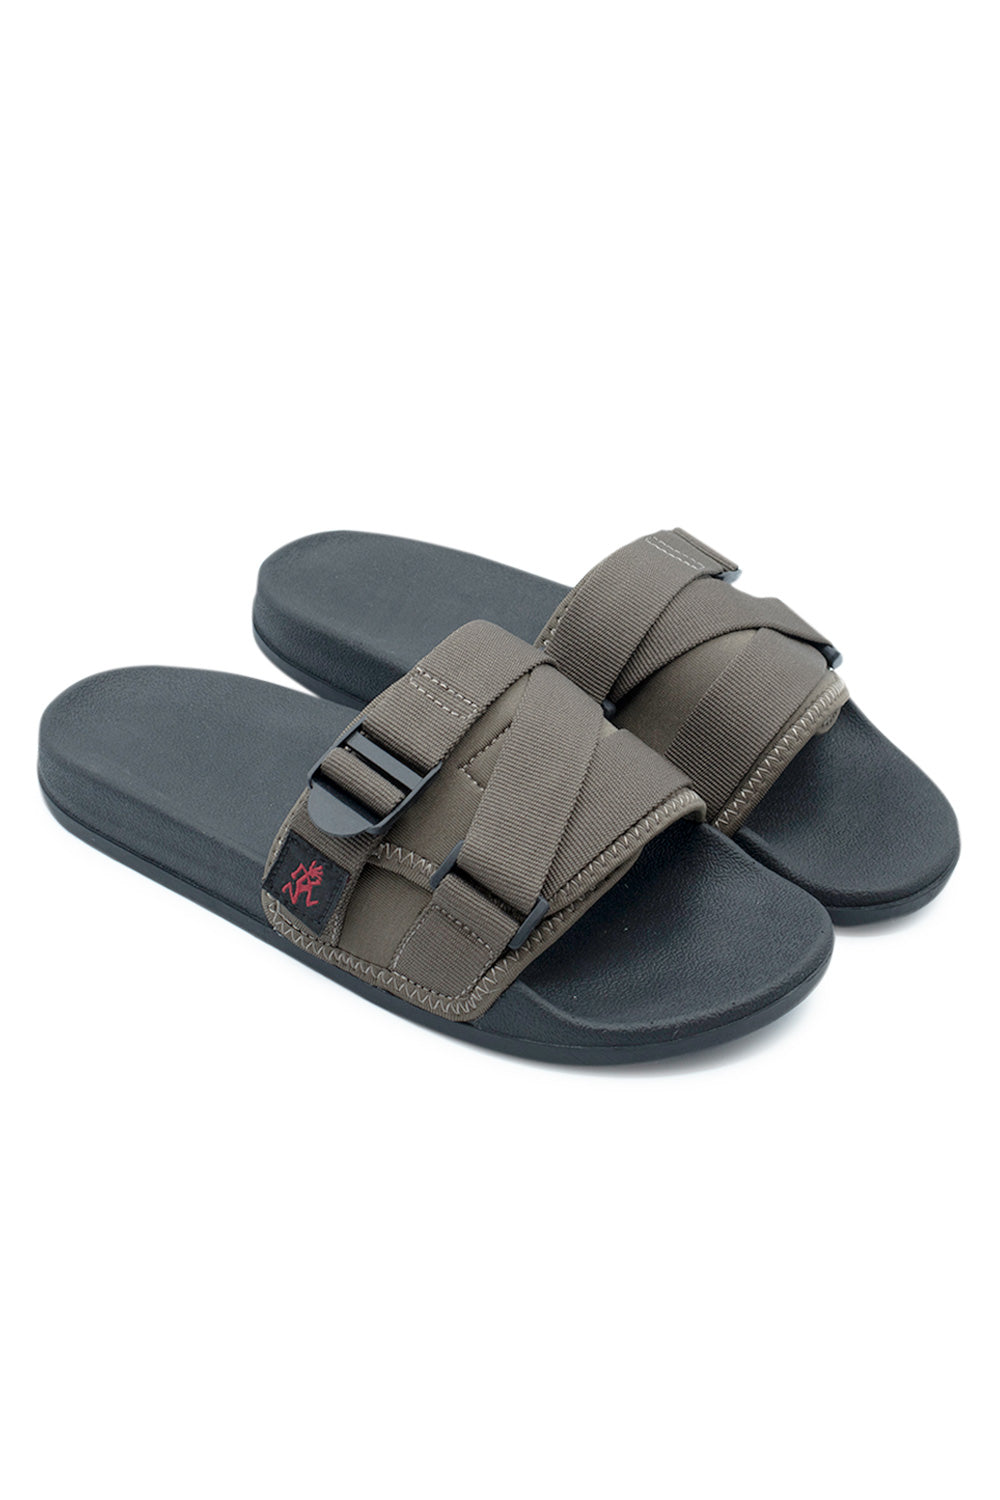 Gramicci Slide Sandals Dark Olive - BONKERS